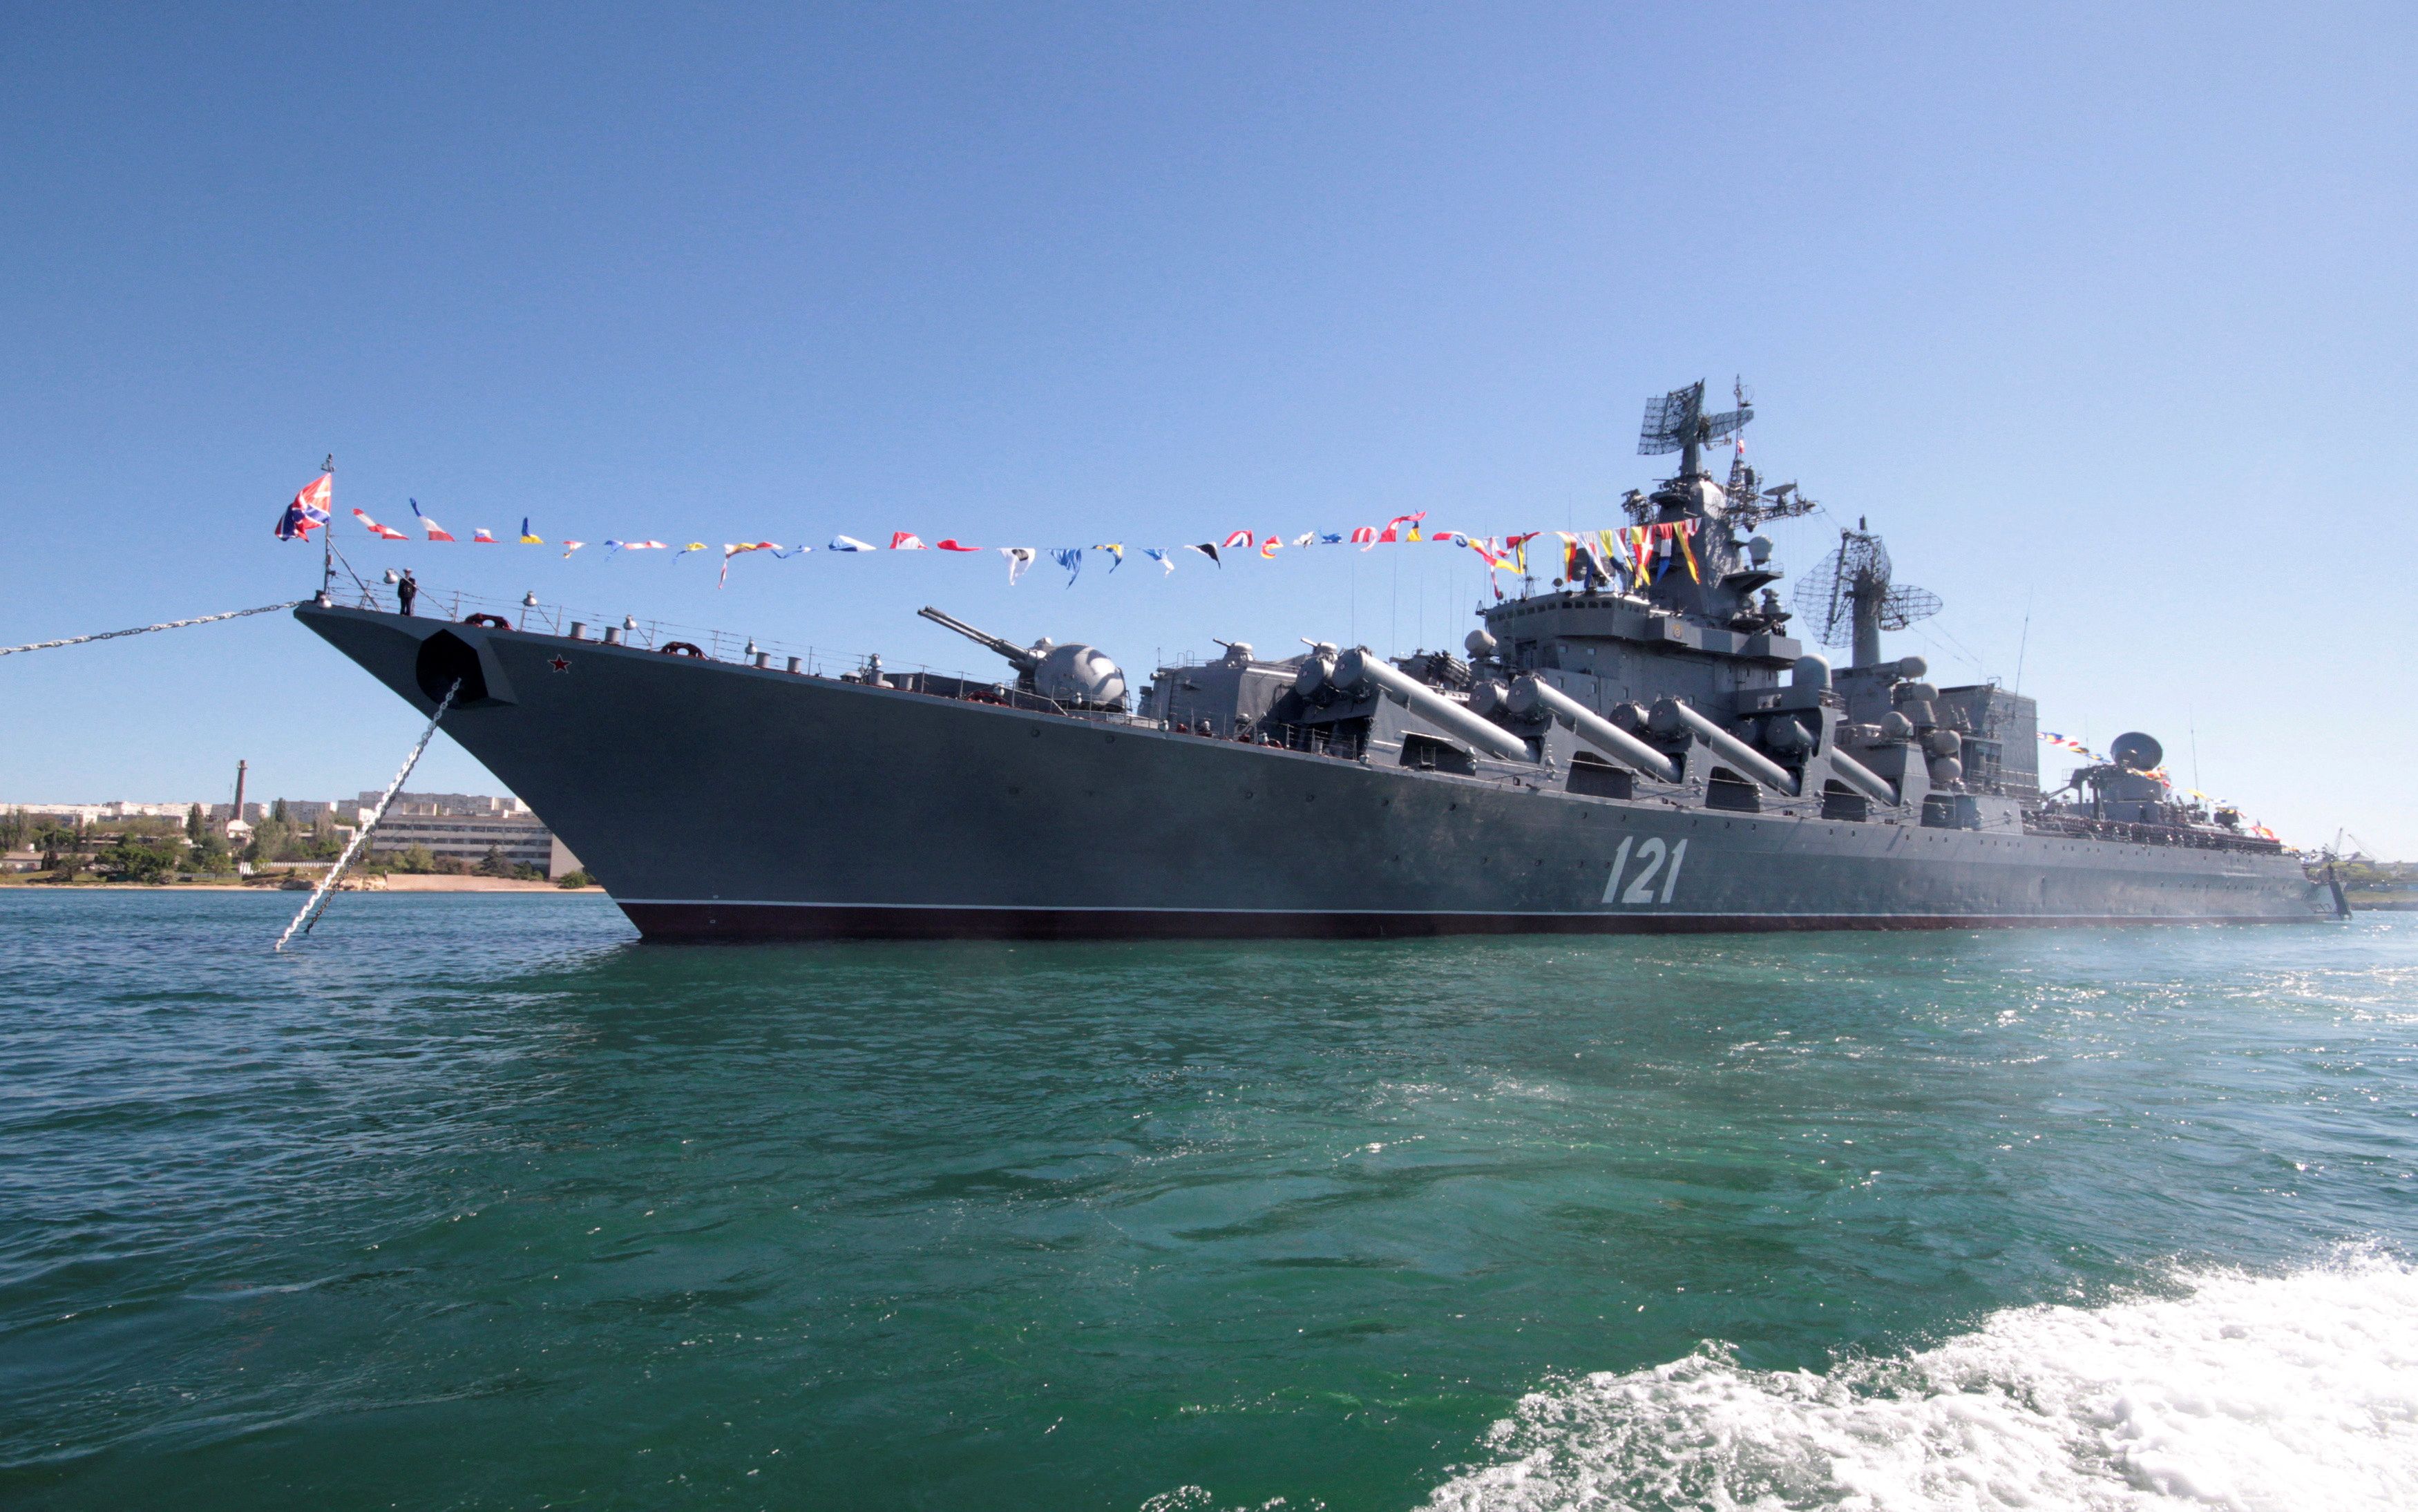 Russian missile cruiser Moskva is moored in the Ukrainian Black Sea port of Sevastopol